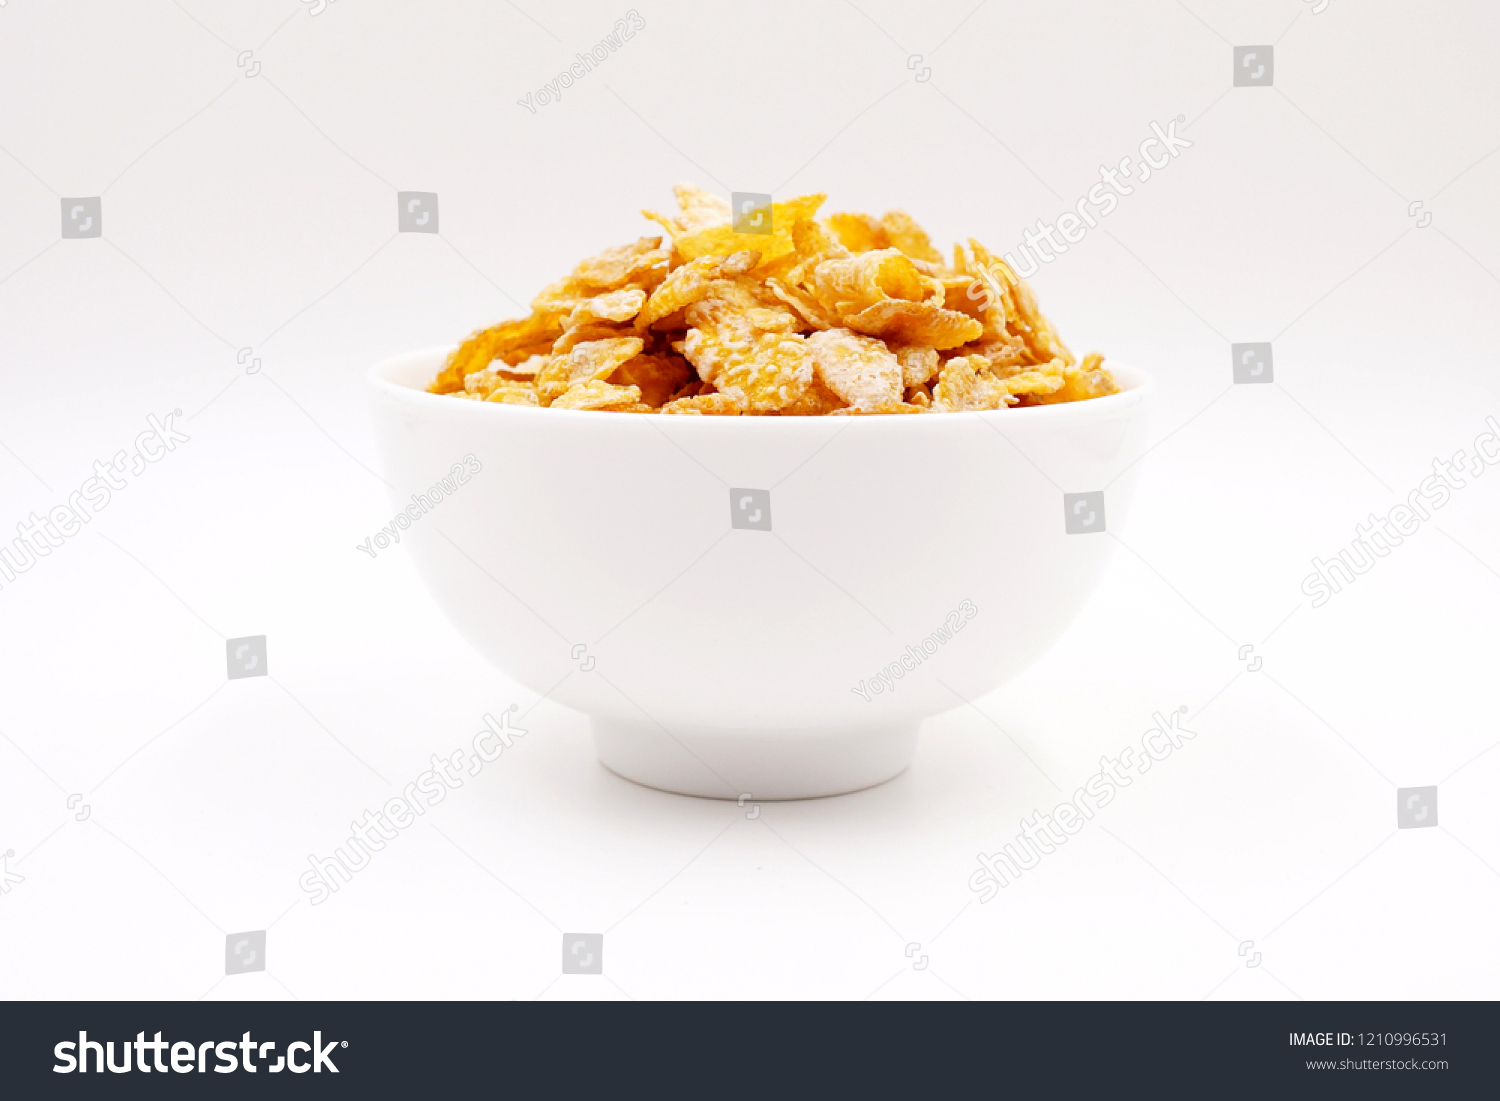 Breakfast cereal - sugar-coated flakes of corn 
 #1210996531